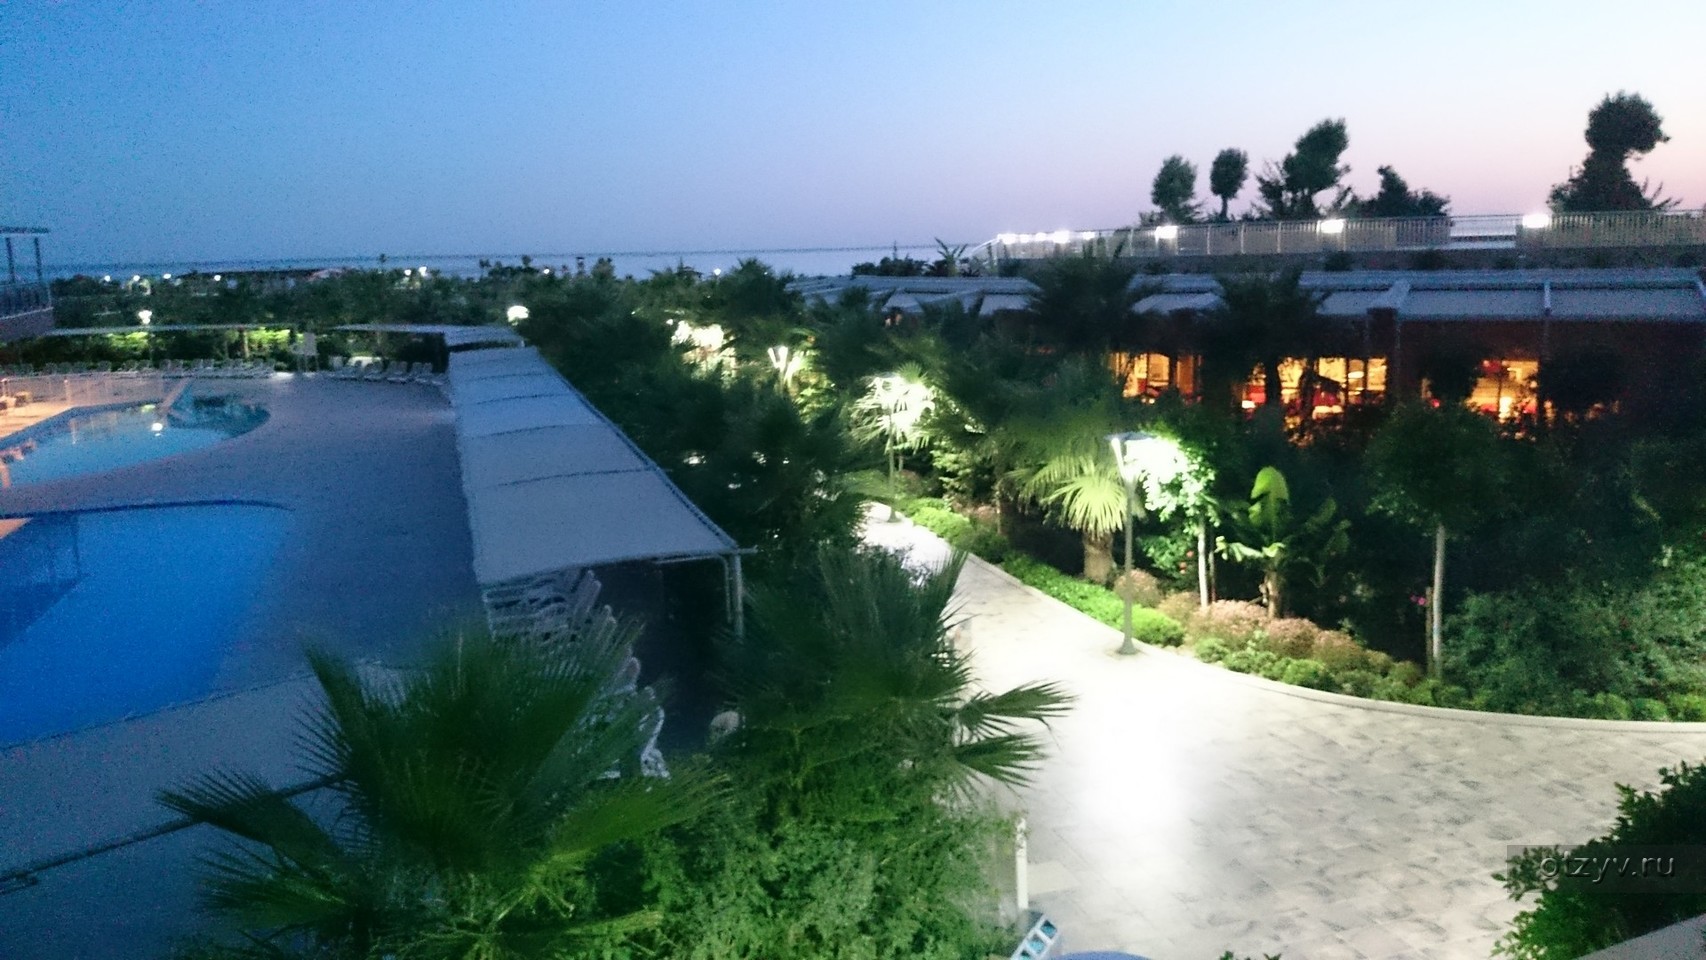 Sunmelia Beach Resort Hotel & Spa